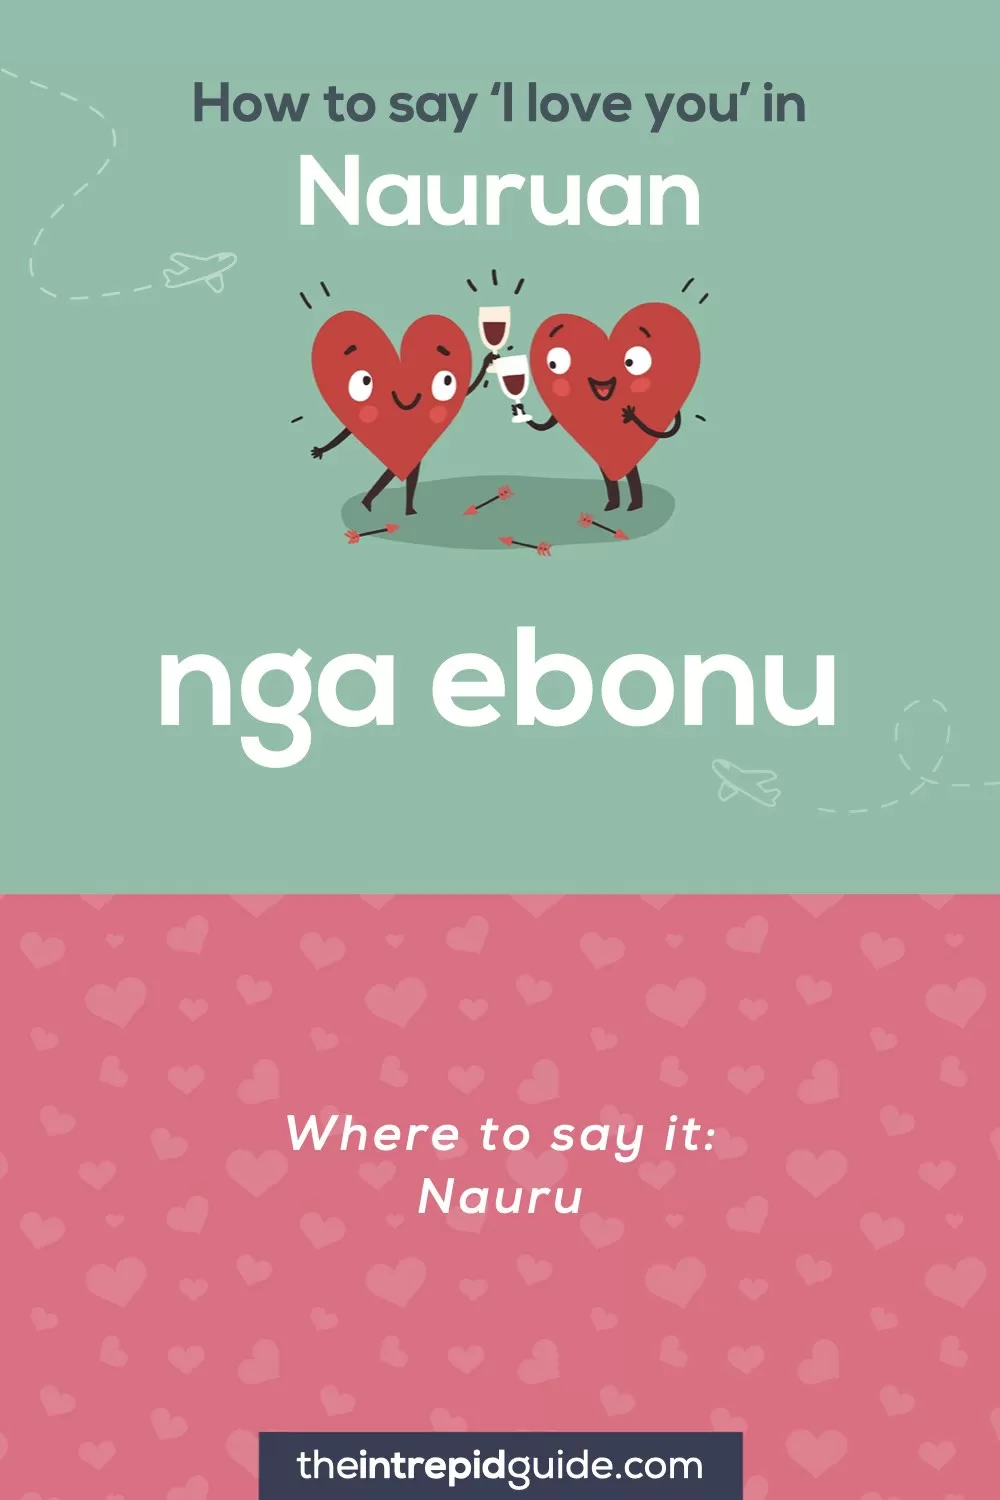 How to say I love you in different languages - Nauruan - nga ebonu